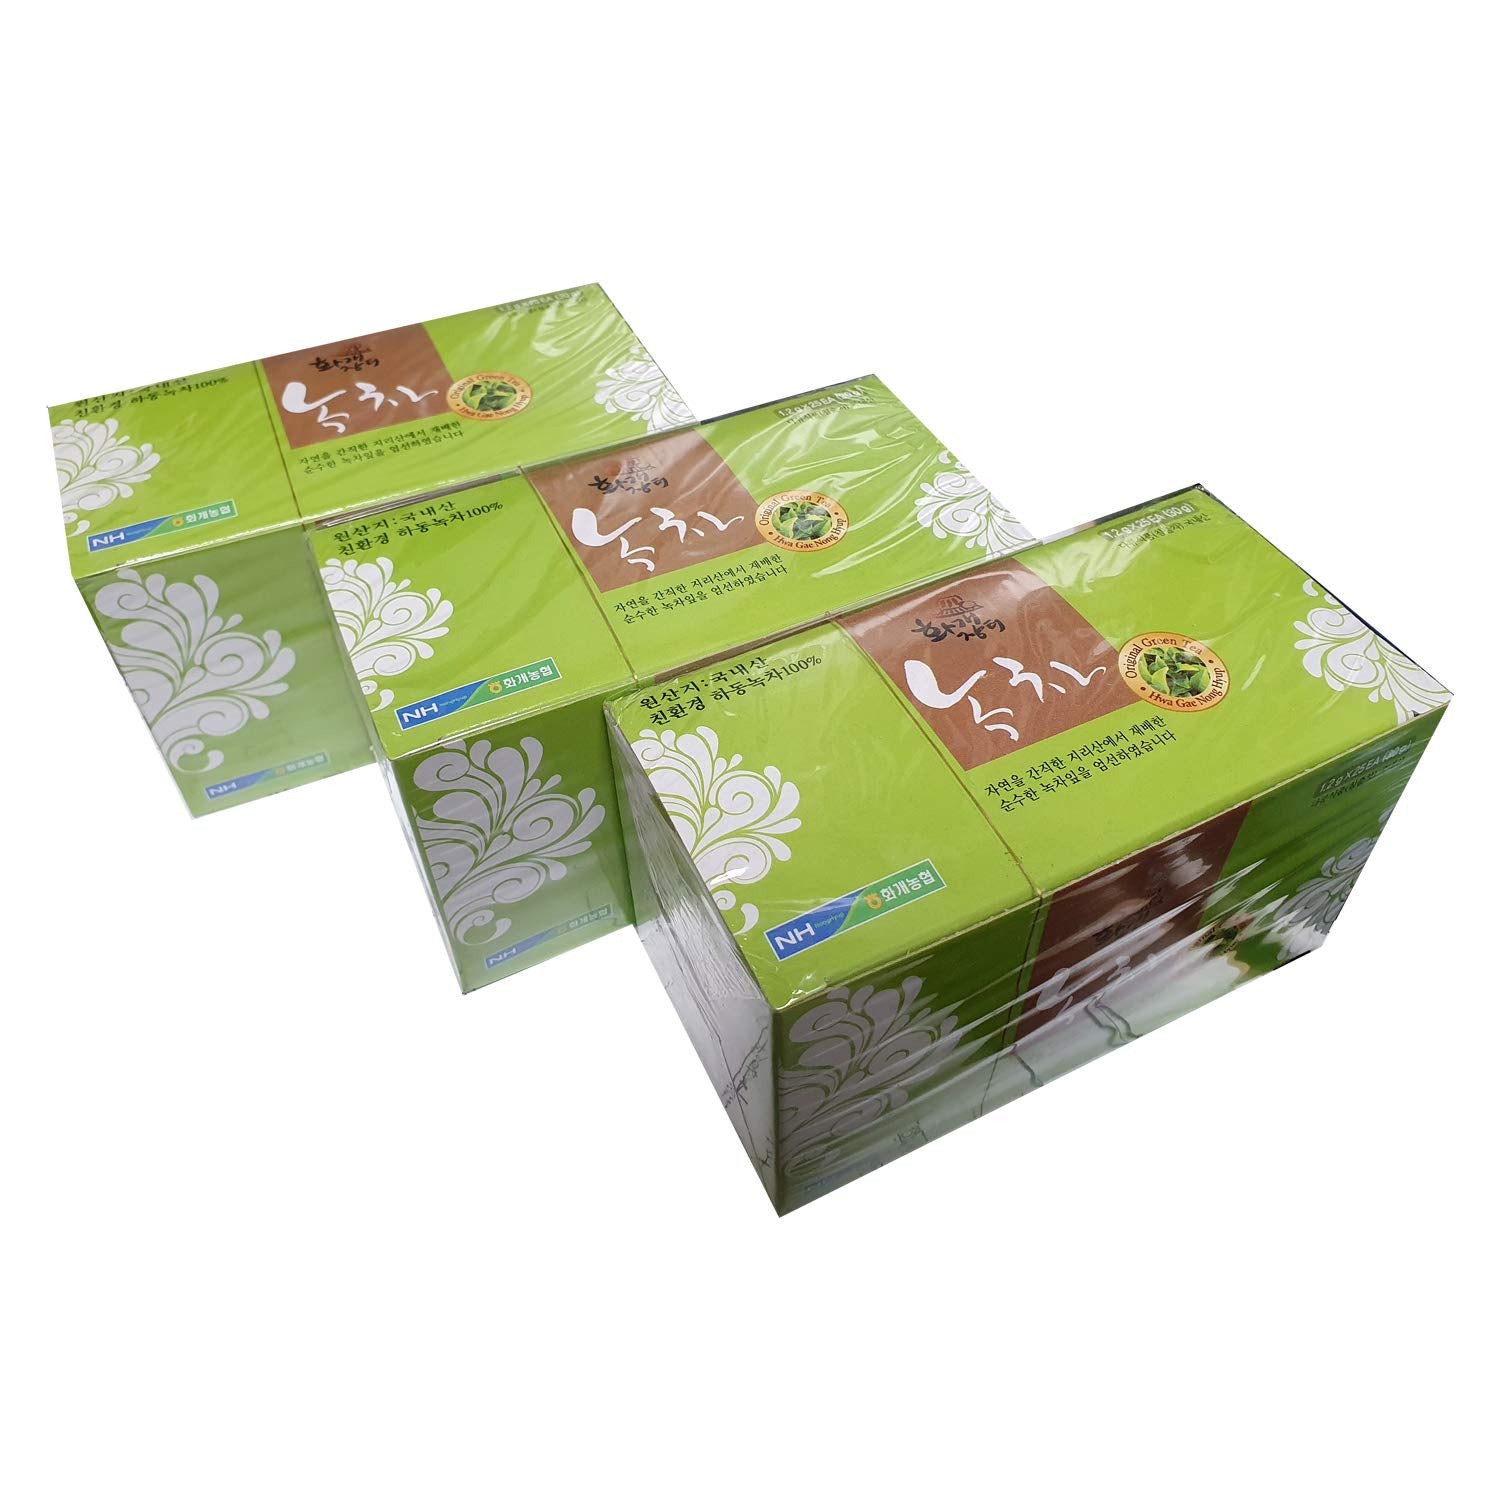 Hwagae Korean Green Tea Bags 3 Count Boxes (Pack of 25) 75Tea Bags Total Individual Green Tea Bags for Hot or Iced Tea Drink Plain